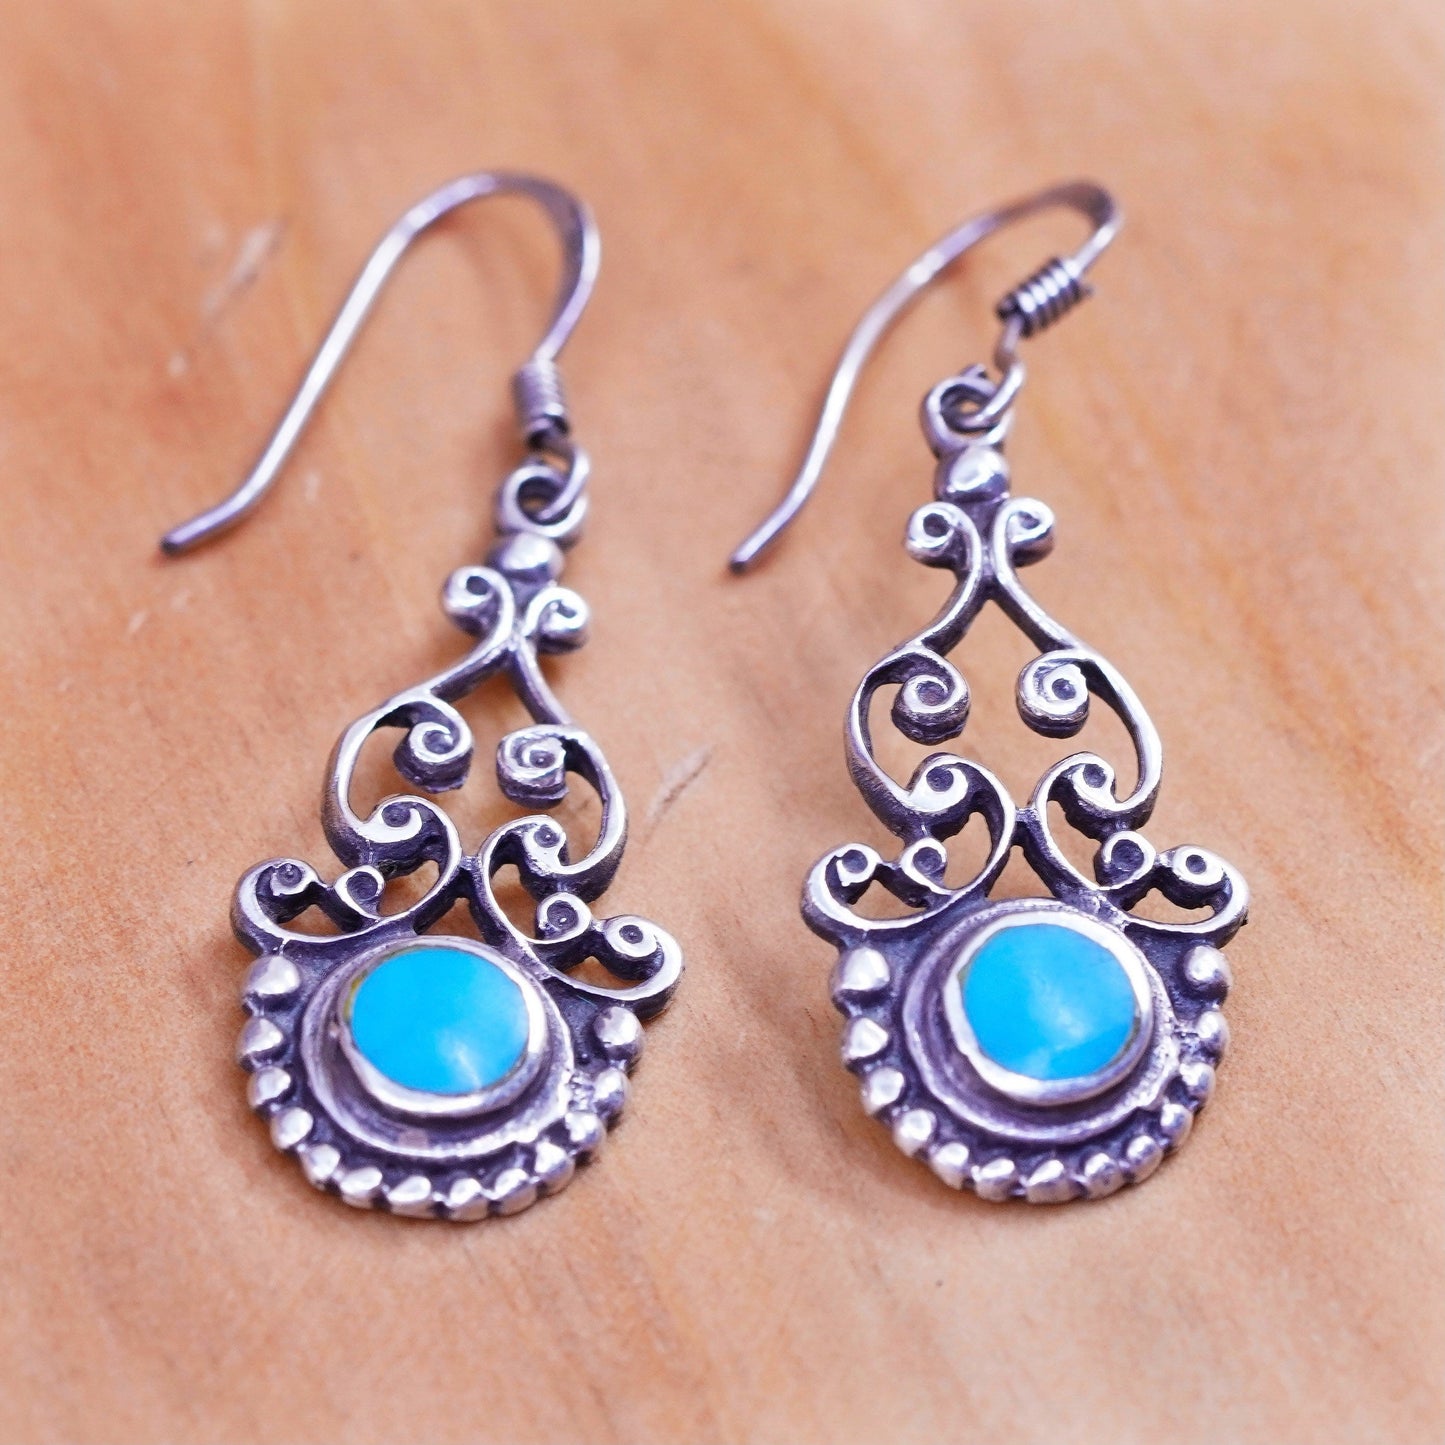 Vintage Sterling 925 silver handmade filigree teardrop earrings with turquoise